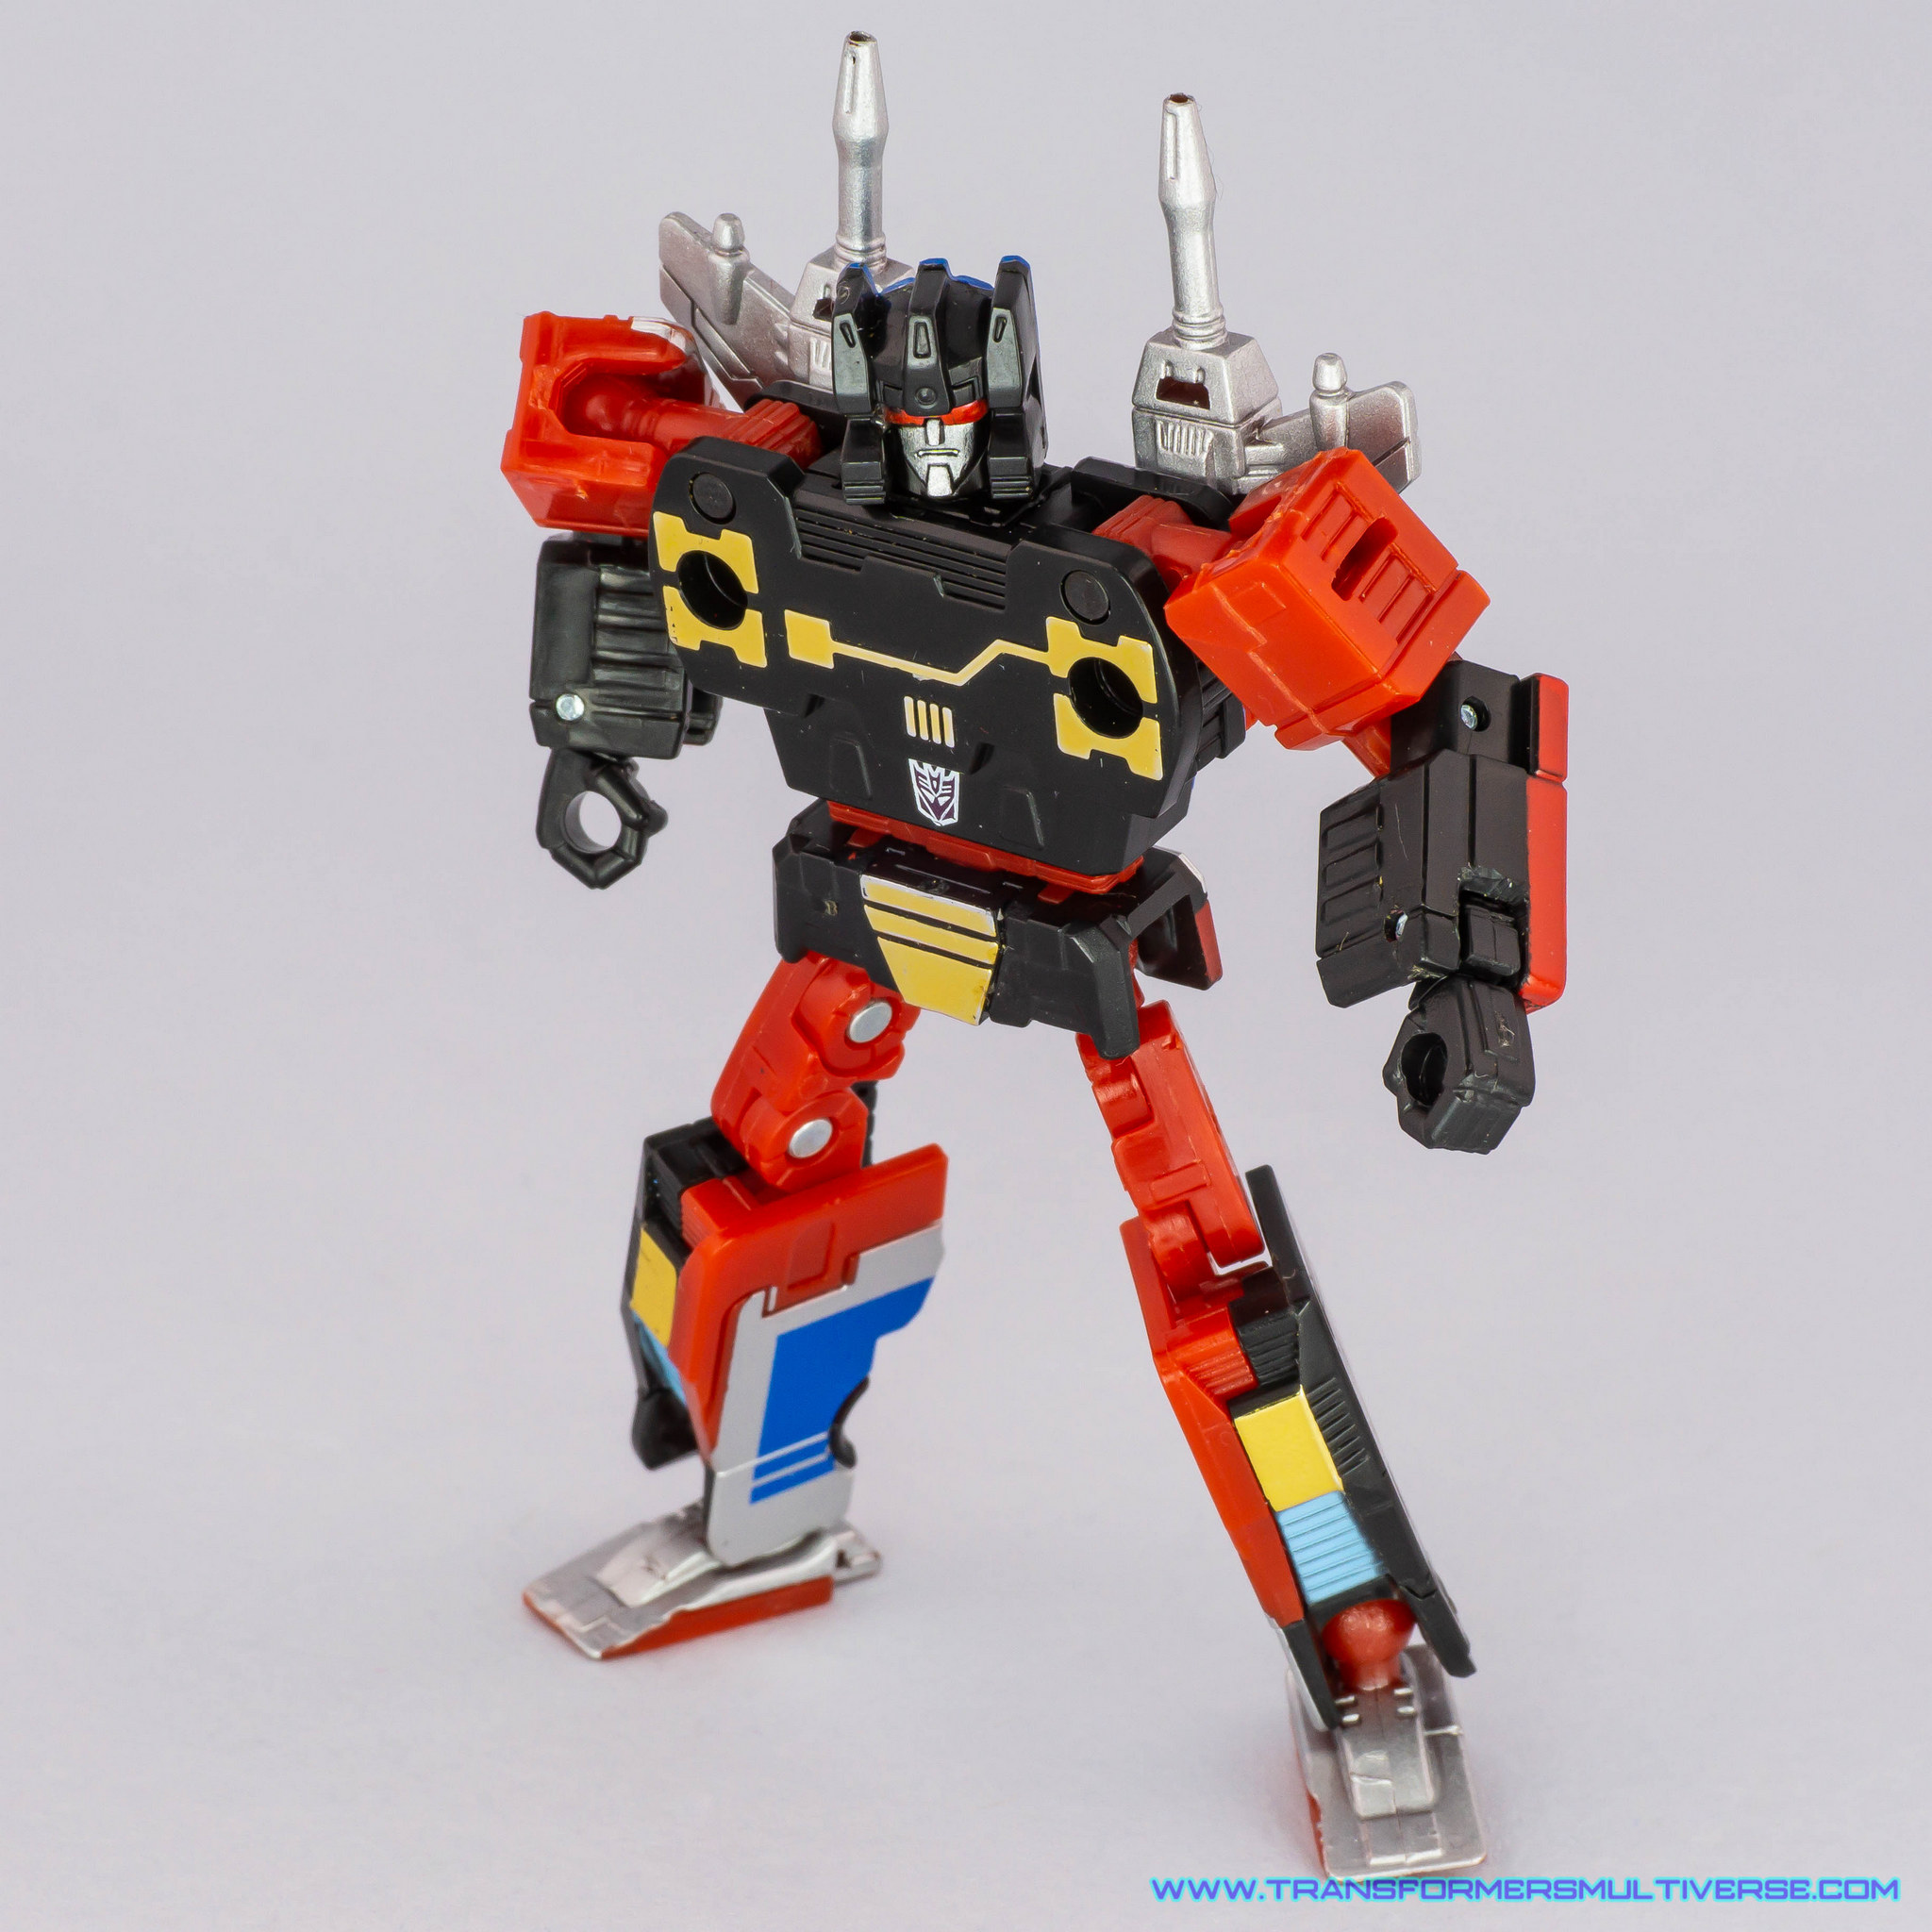 Transformers Masterpiece Frenzy robot mode